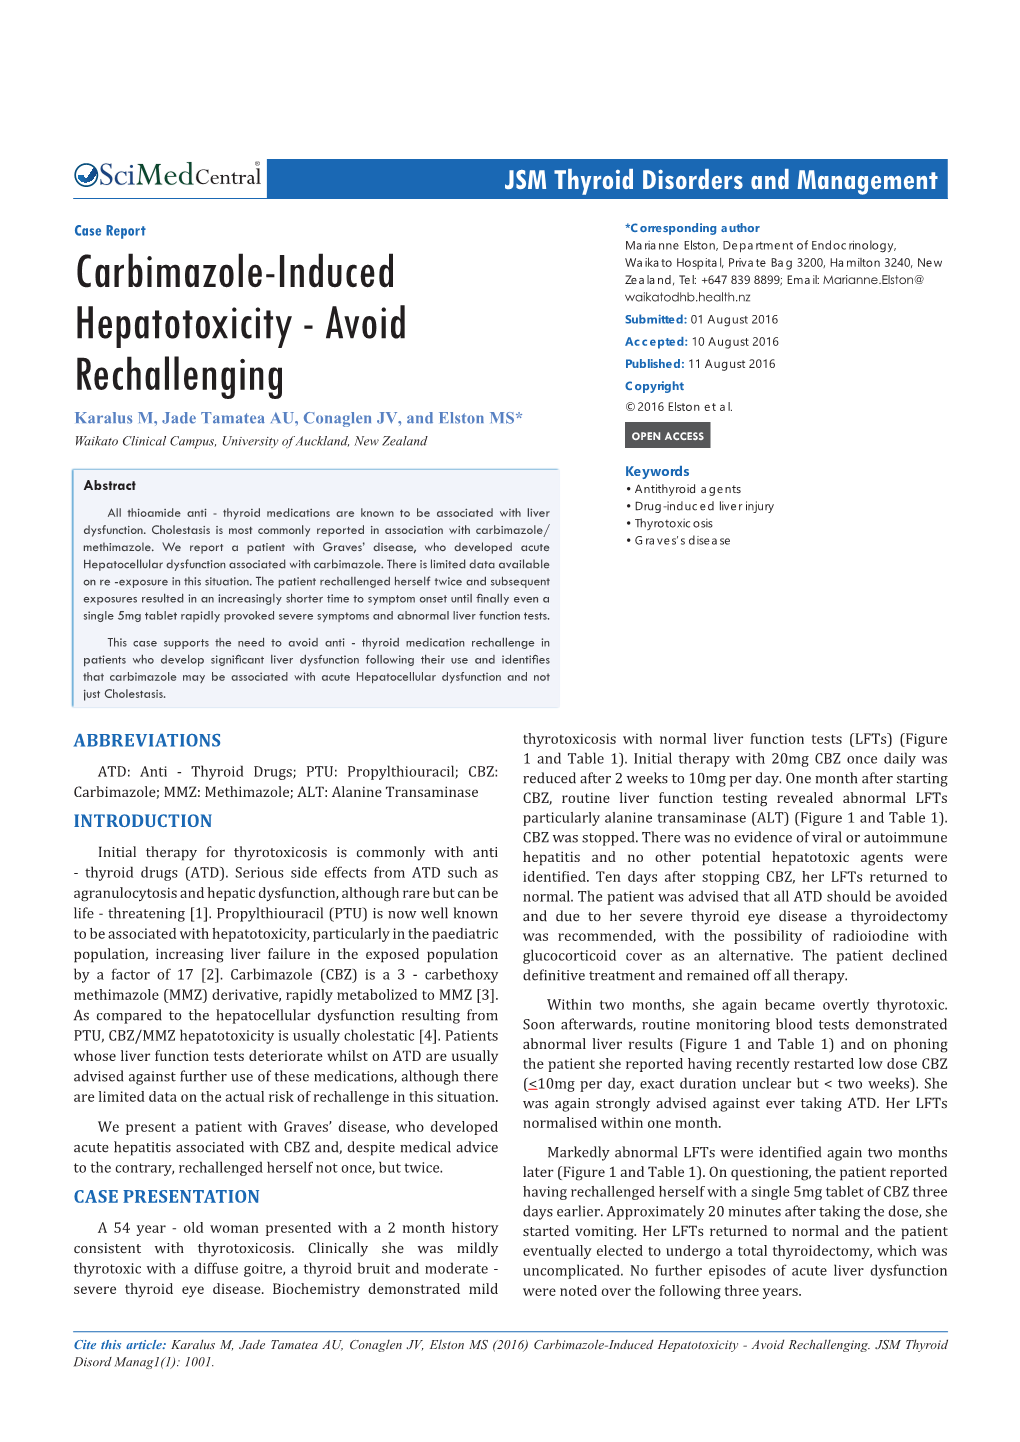 Carbimazole-Induced Hepatotoxicity - Avoid Rechallenging